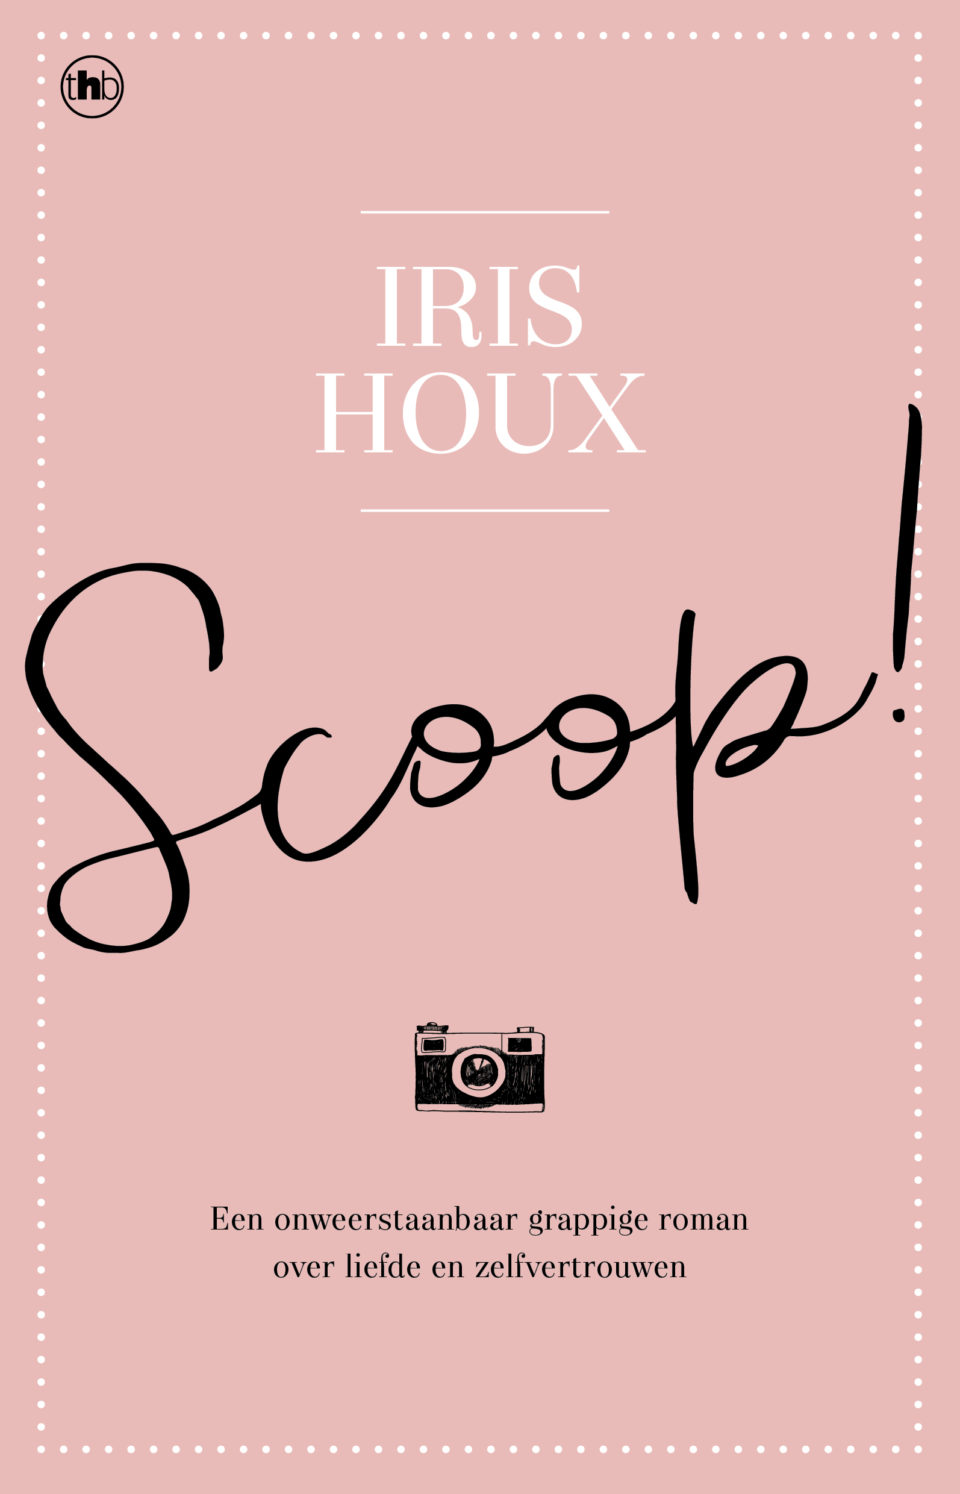 irishoux_scoop-2d